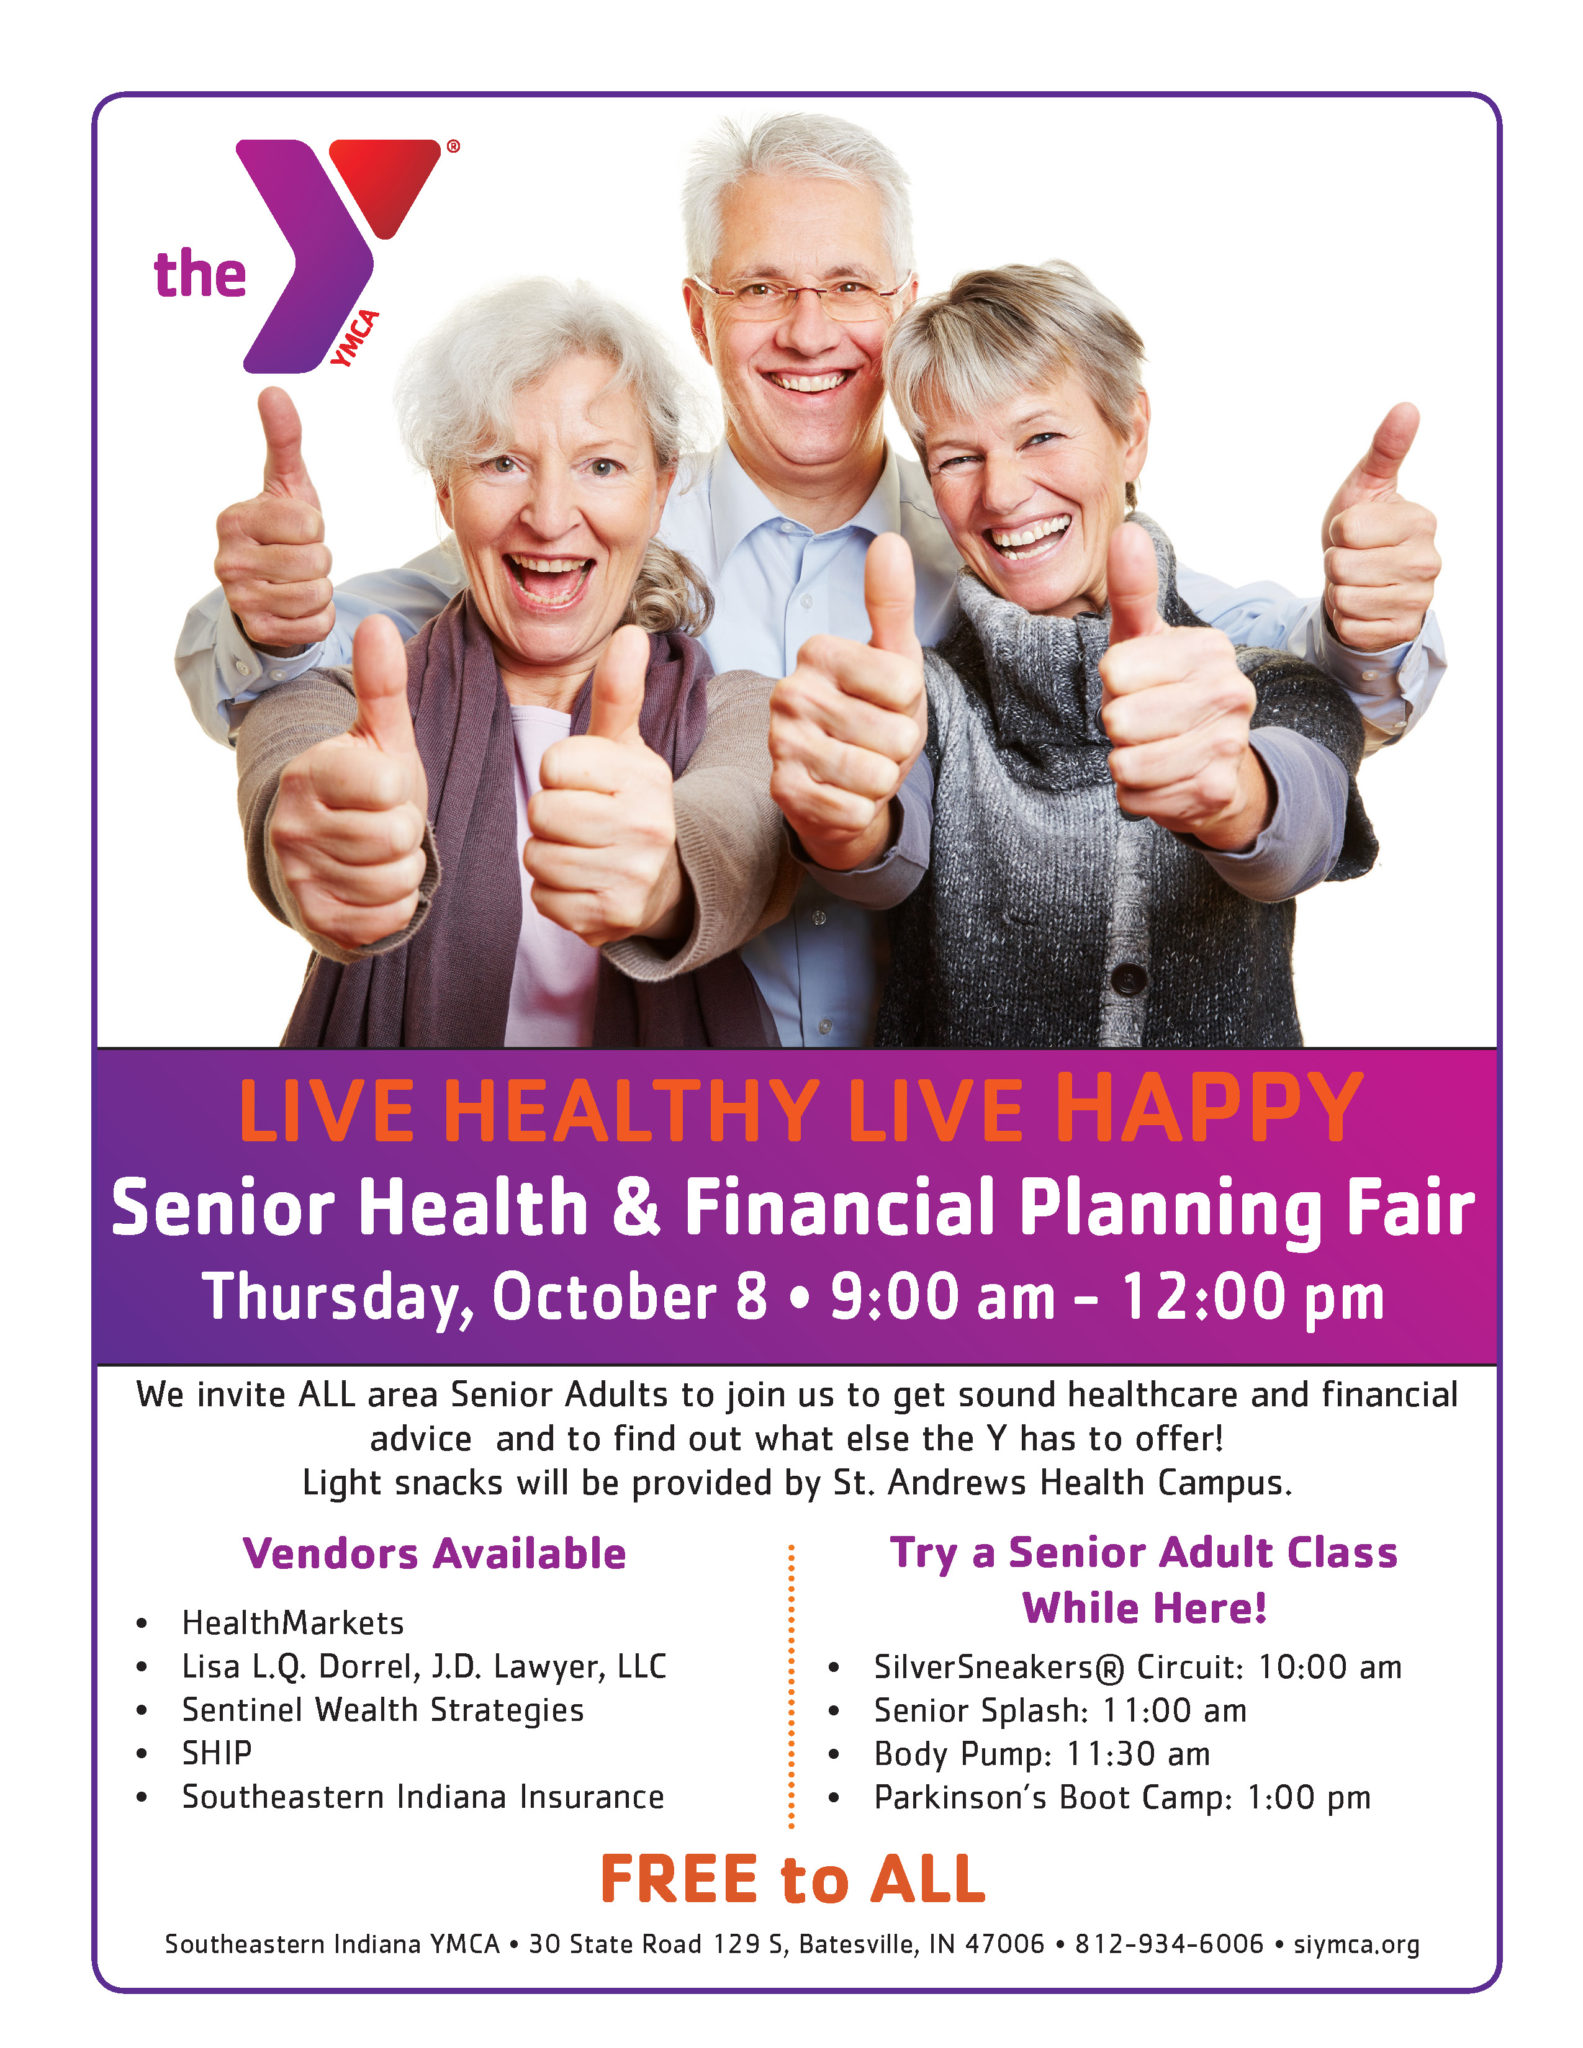 Southeastern Indiana YMCA Senior Health & Financial Planning Fair